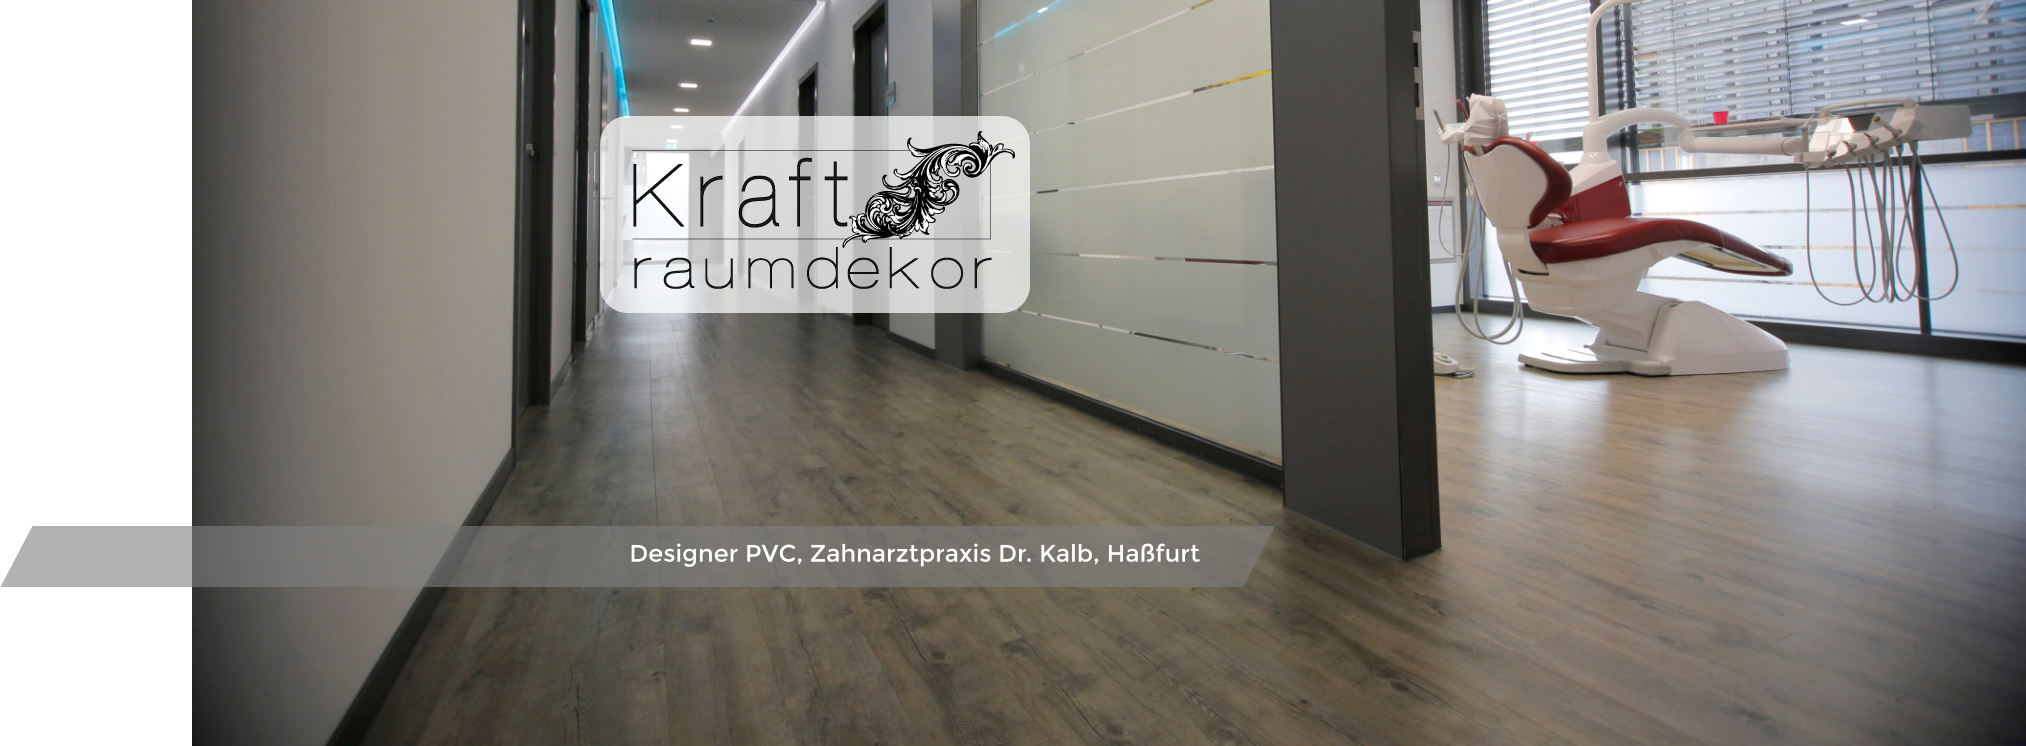 Designer PVC, Zahnarztpraxis Dr. Kalb, Haßfurt Kraftraumdekor